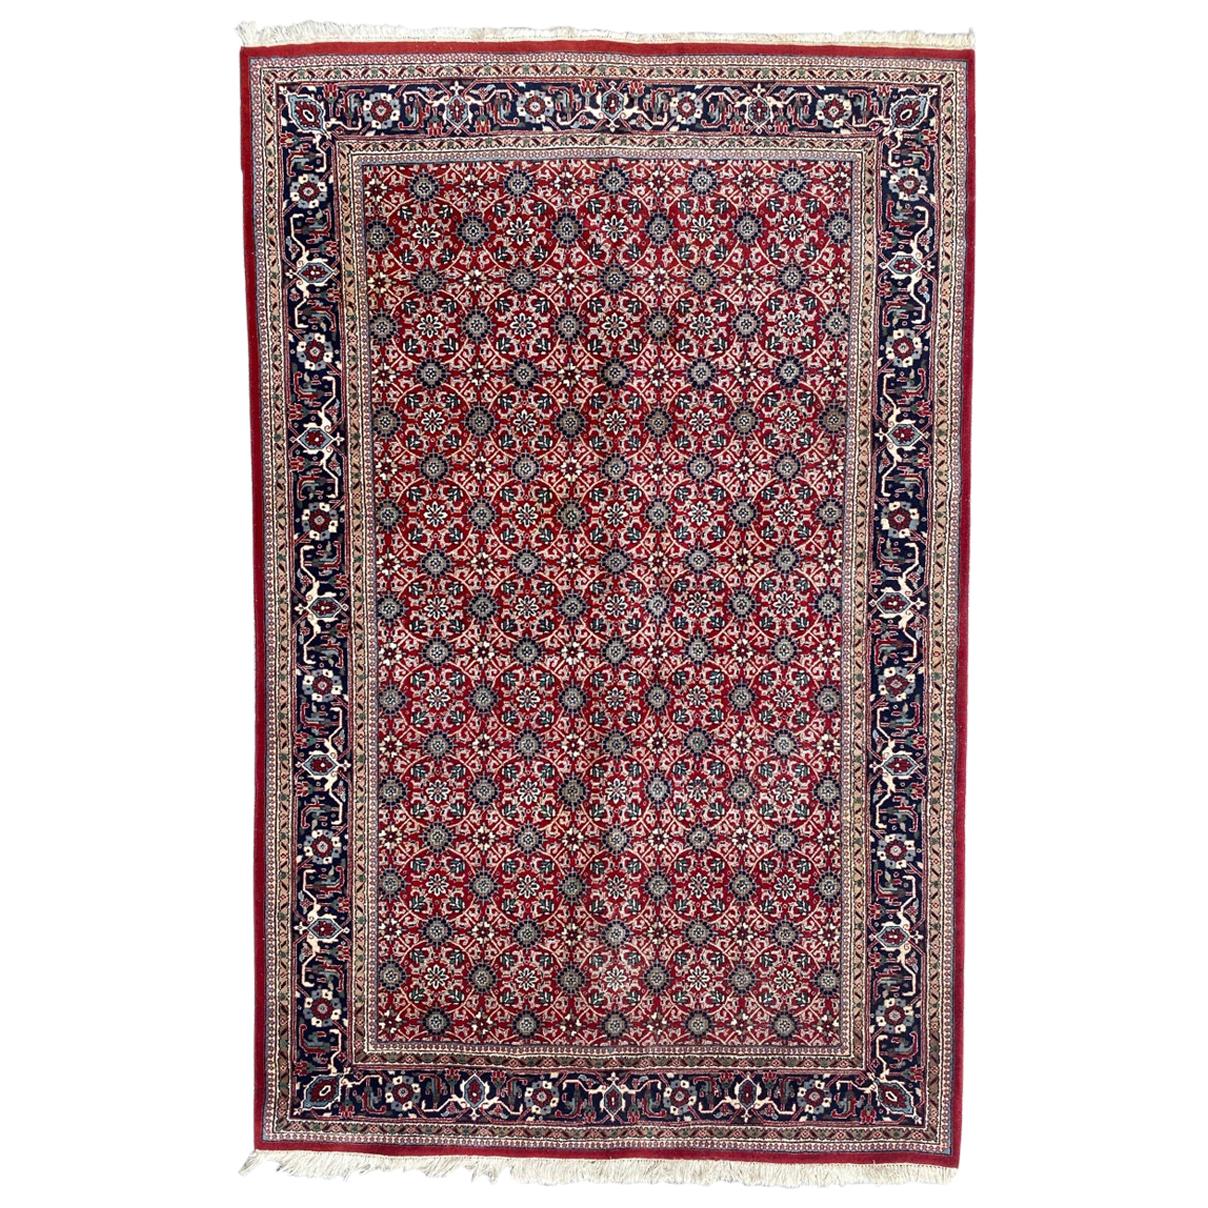 Bobyrug's Nice Vintage Indian rug